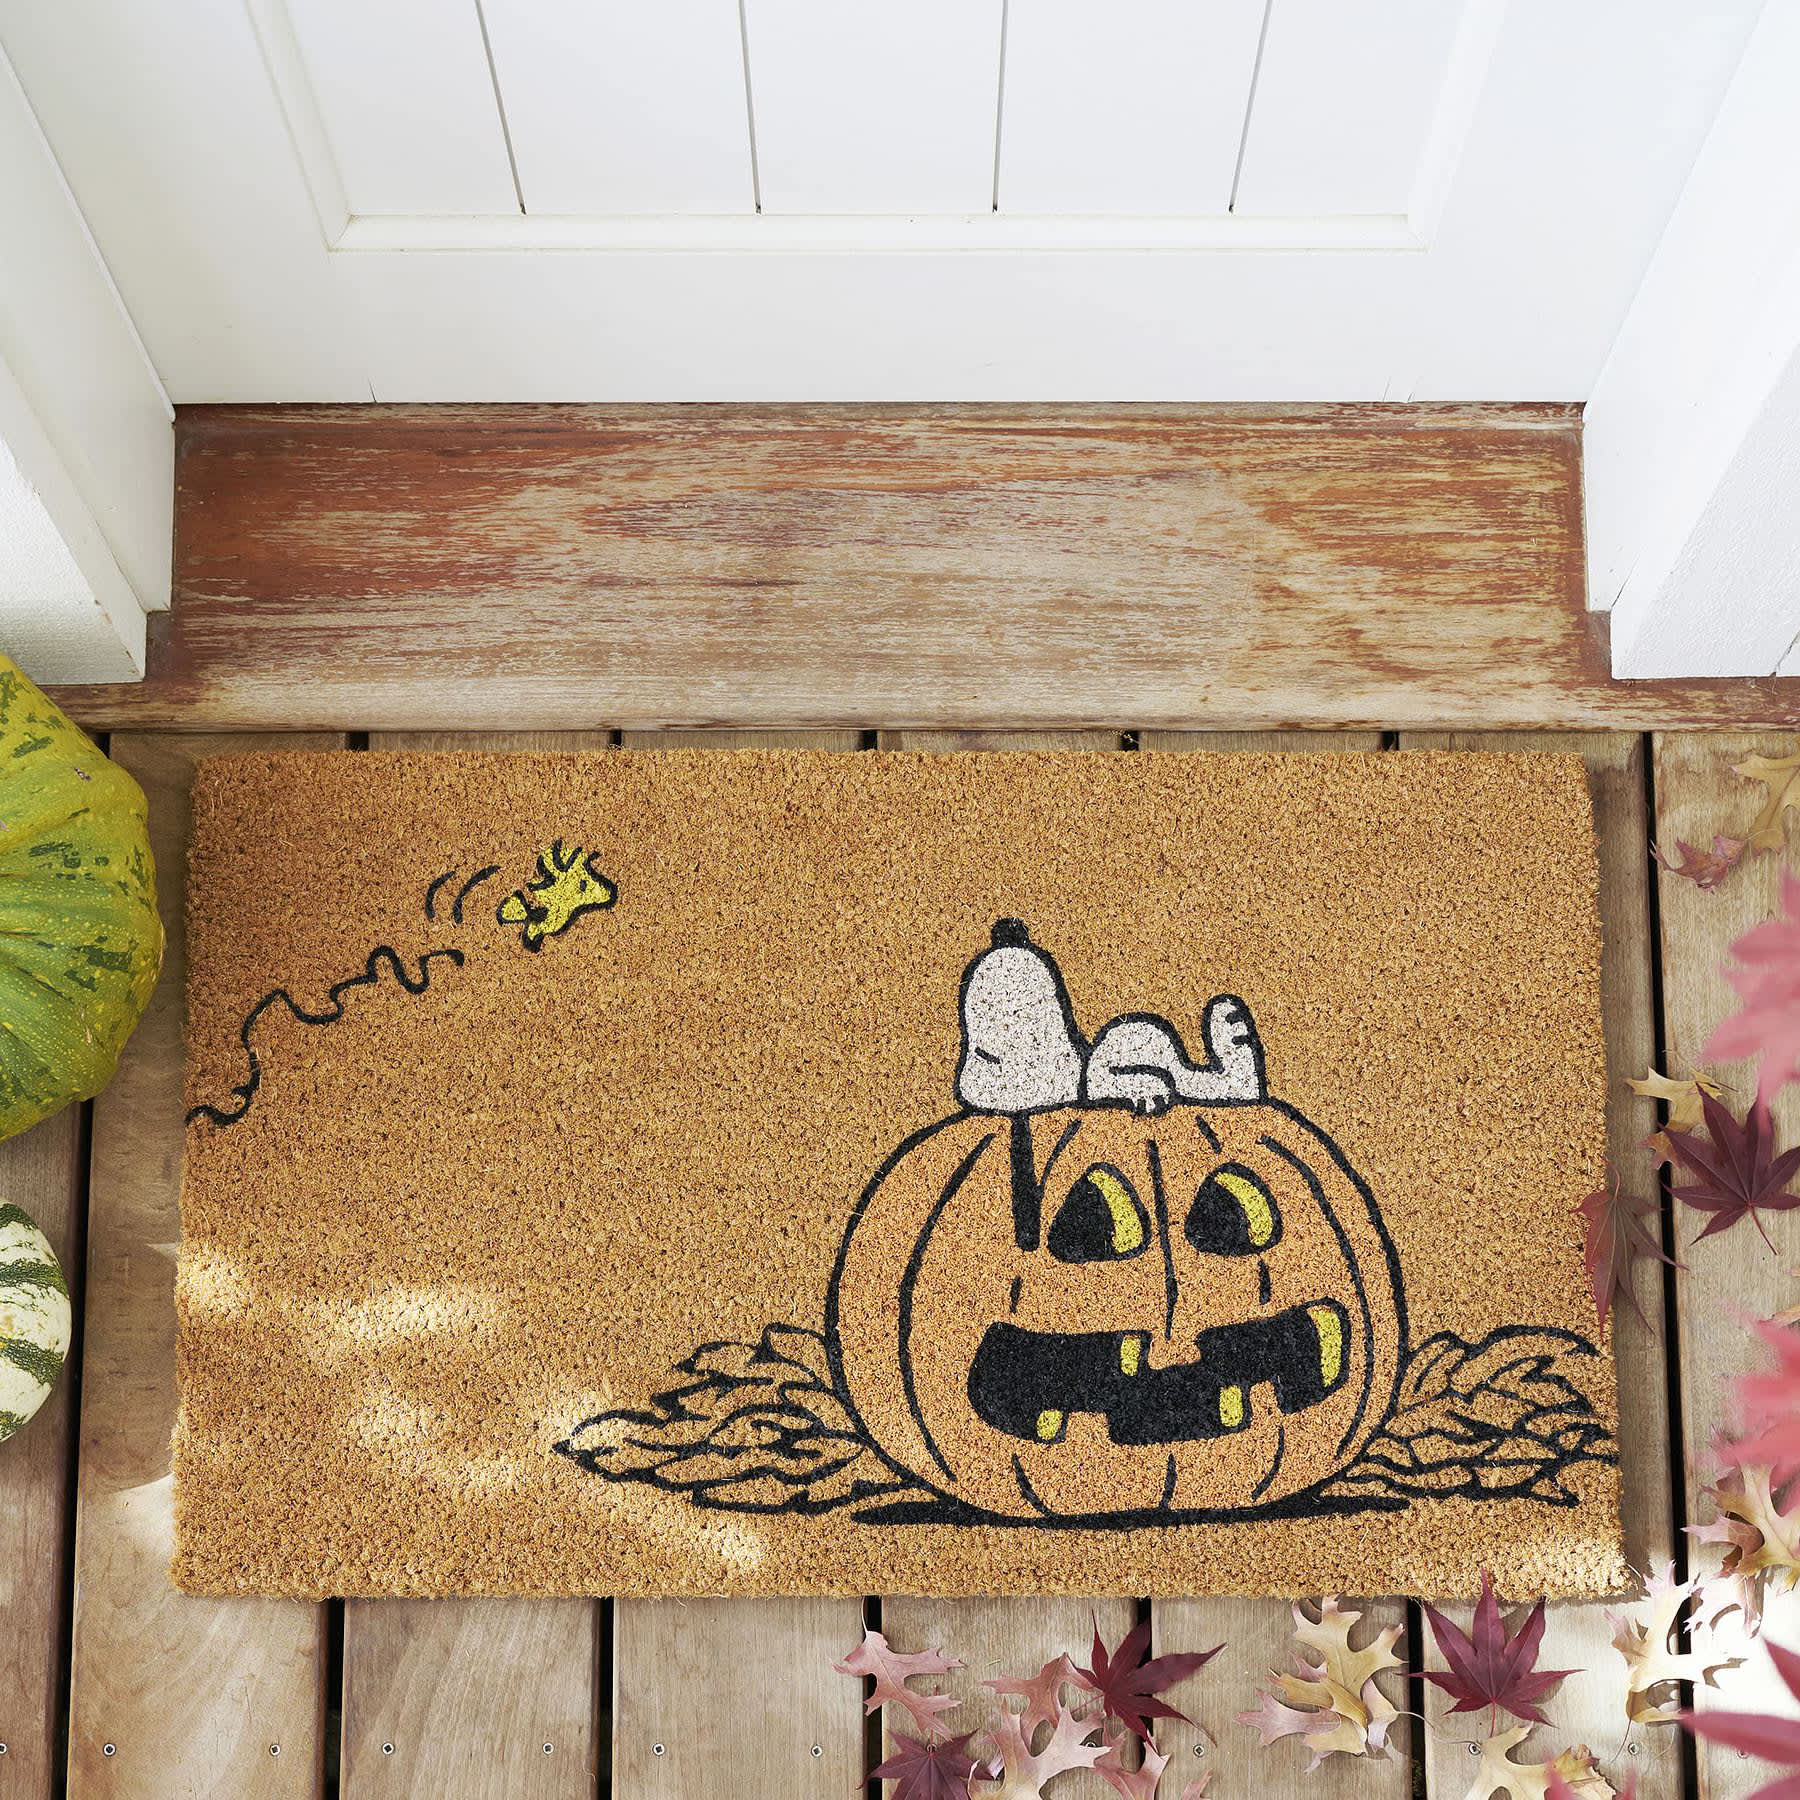 15 Halloween Doormats That Will Delight Trick-or-Treaters